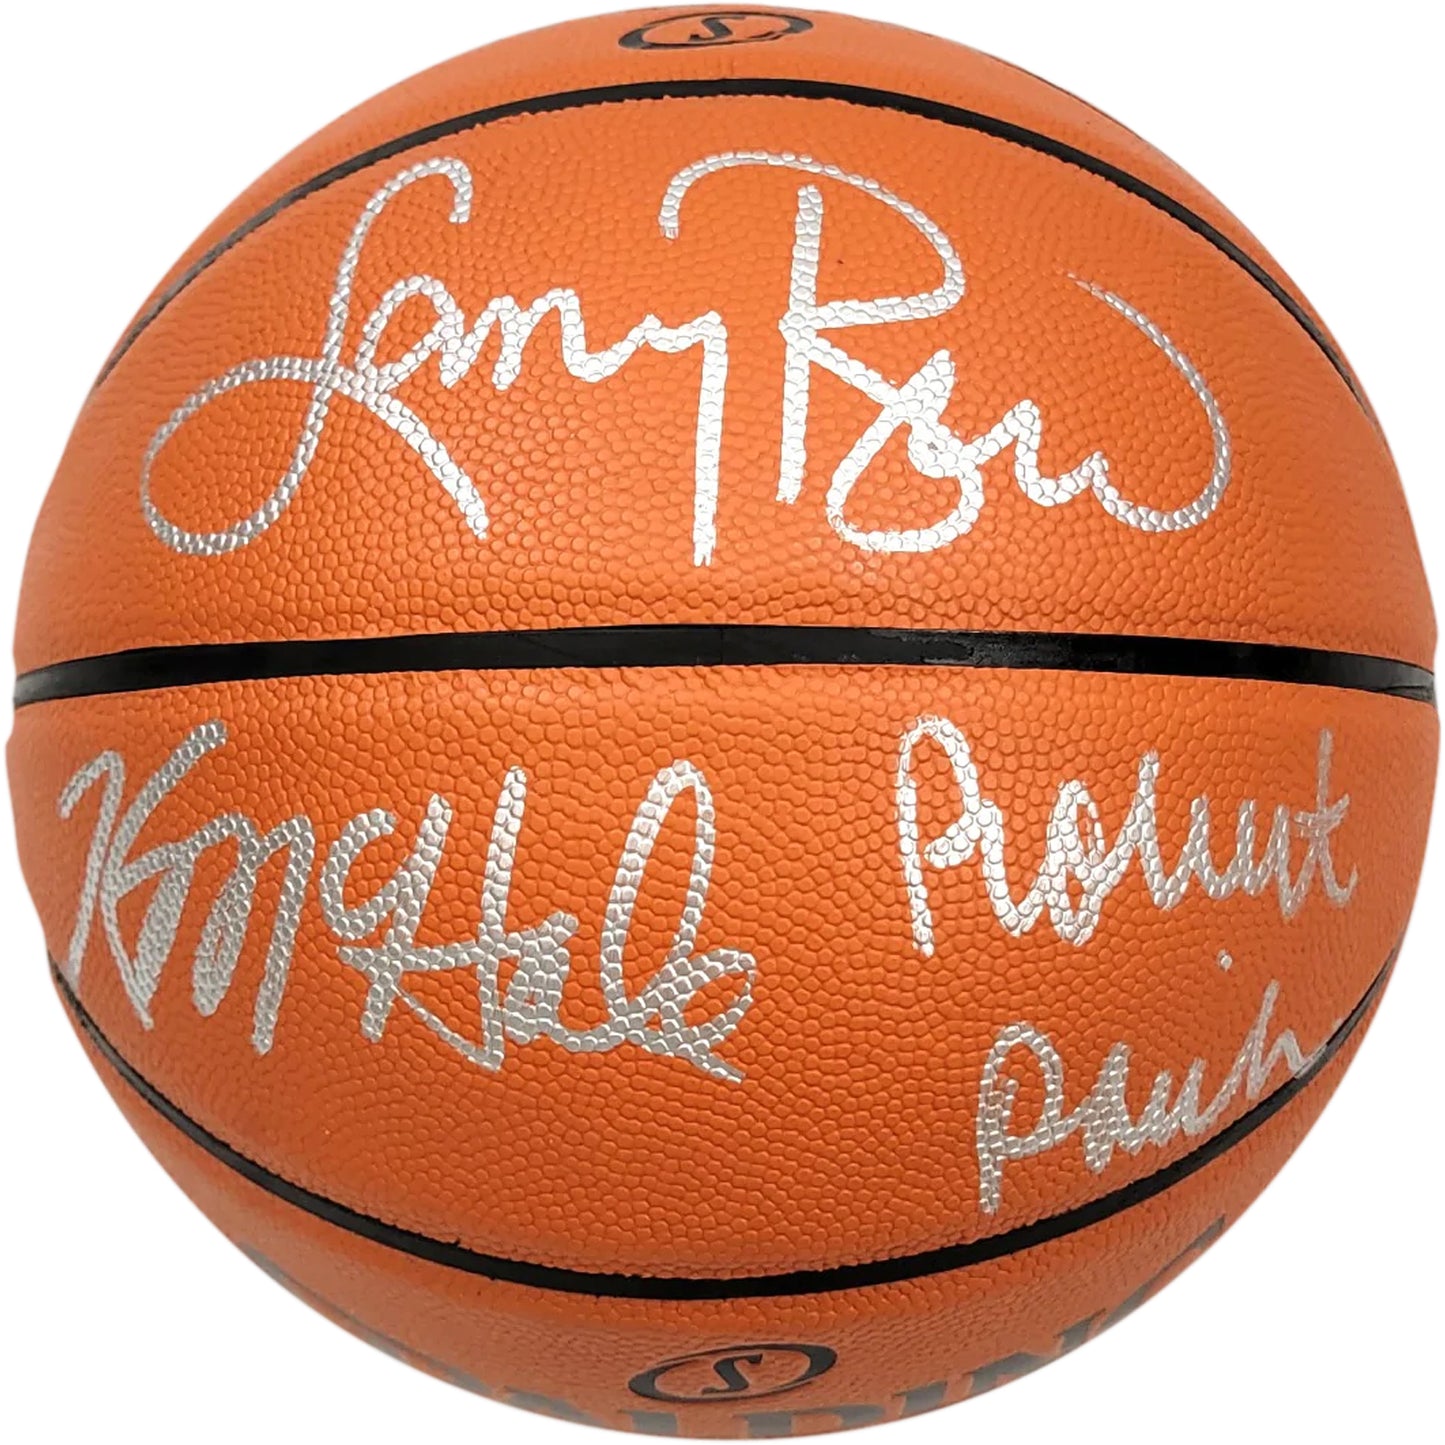 Larry Bird, Kevin McHale And Robert Parish Autographed NBA Replica Basketball - Beckett Witness